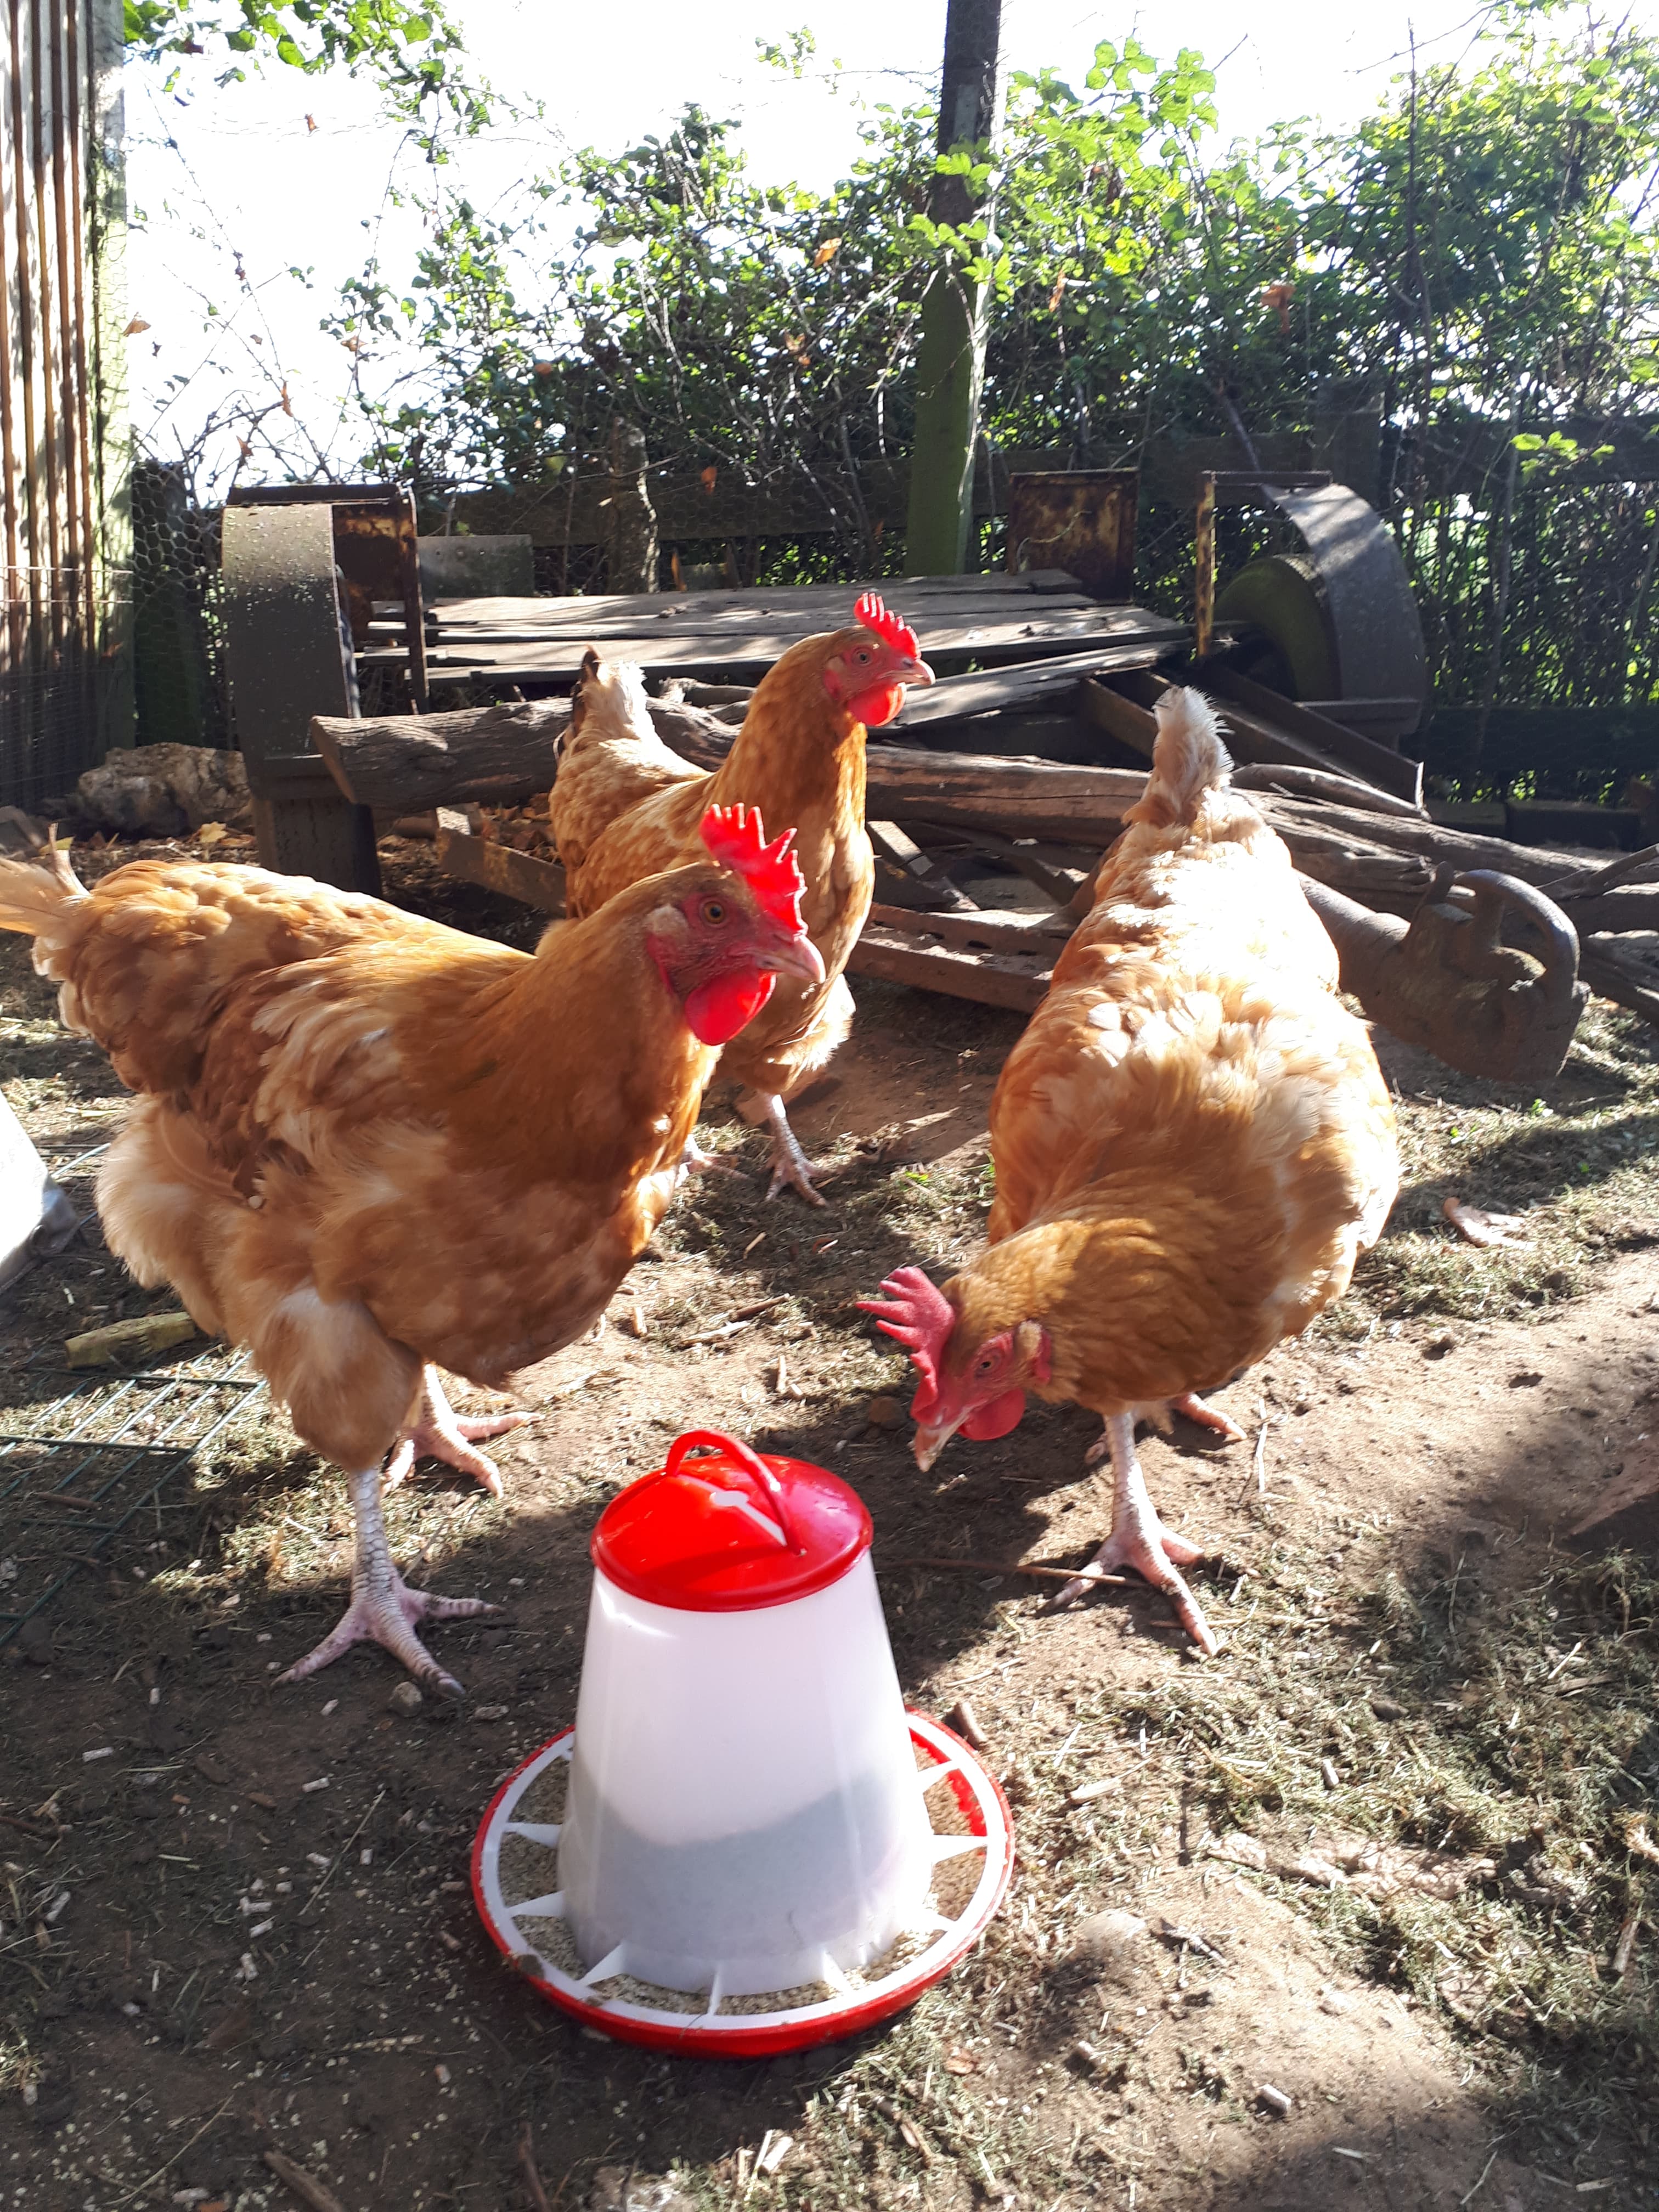 The girls enjoying their new feeder